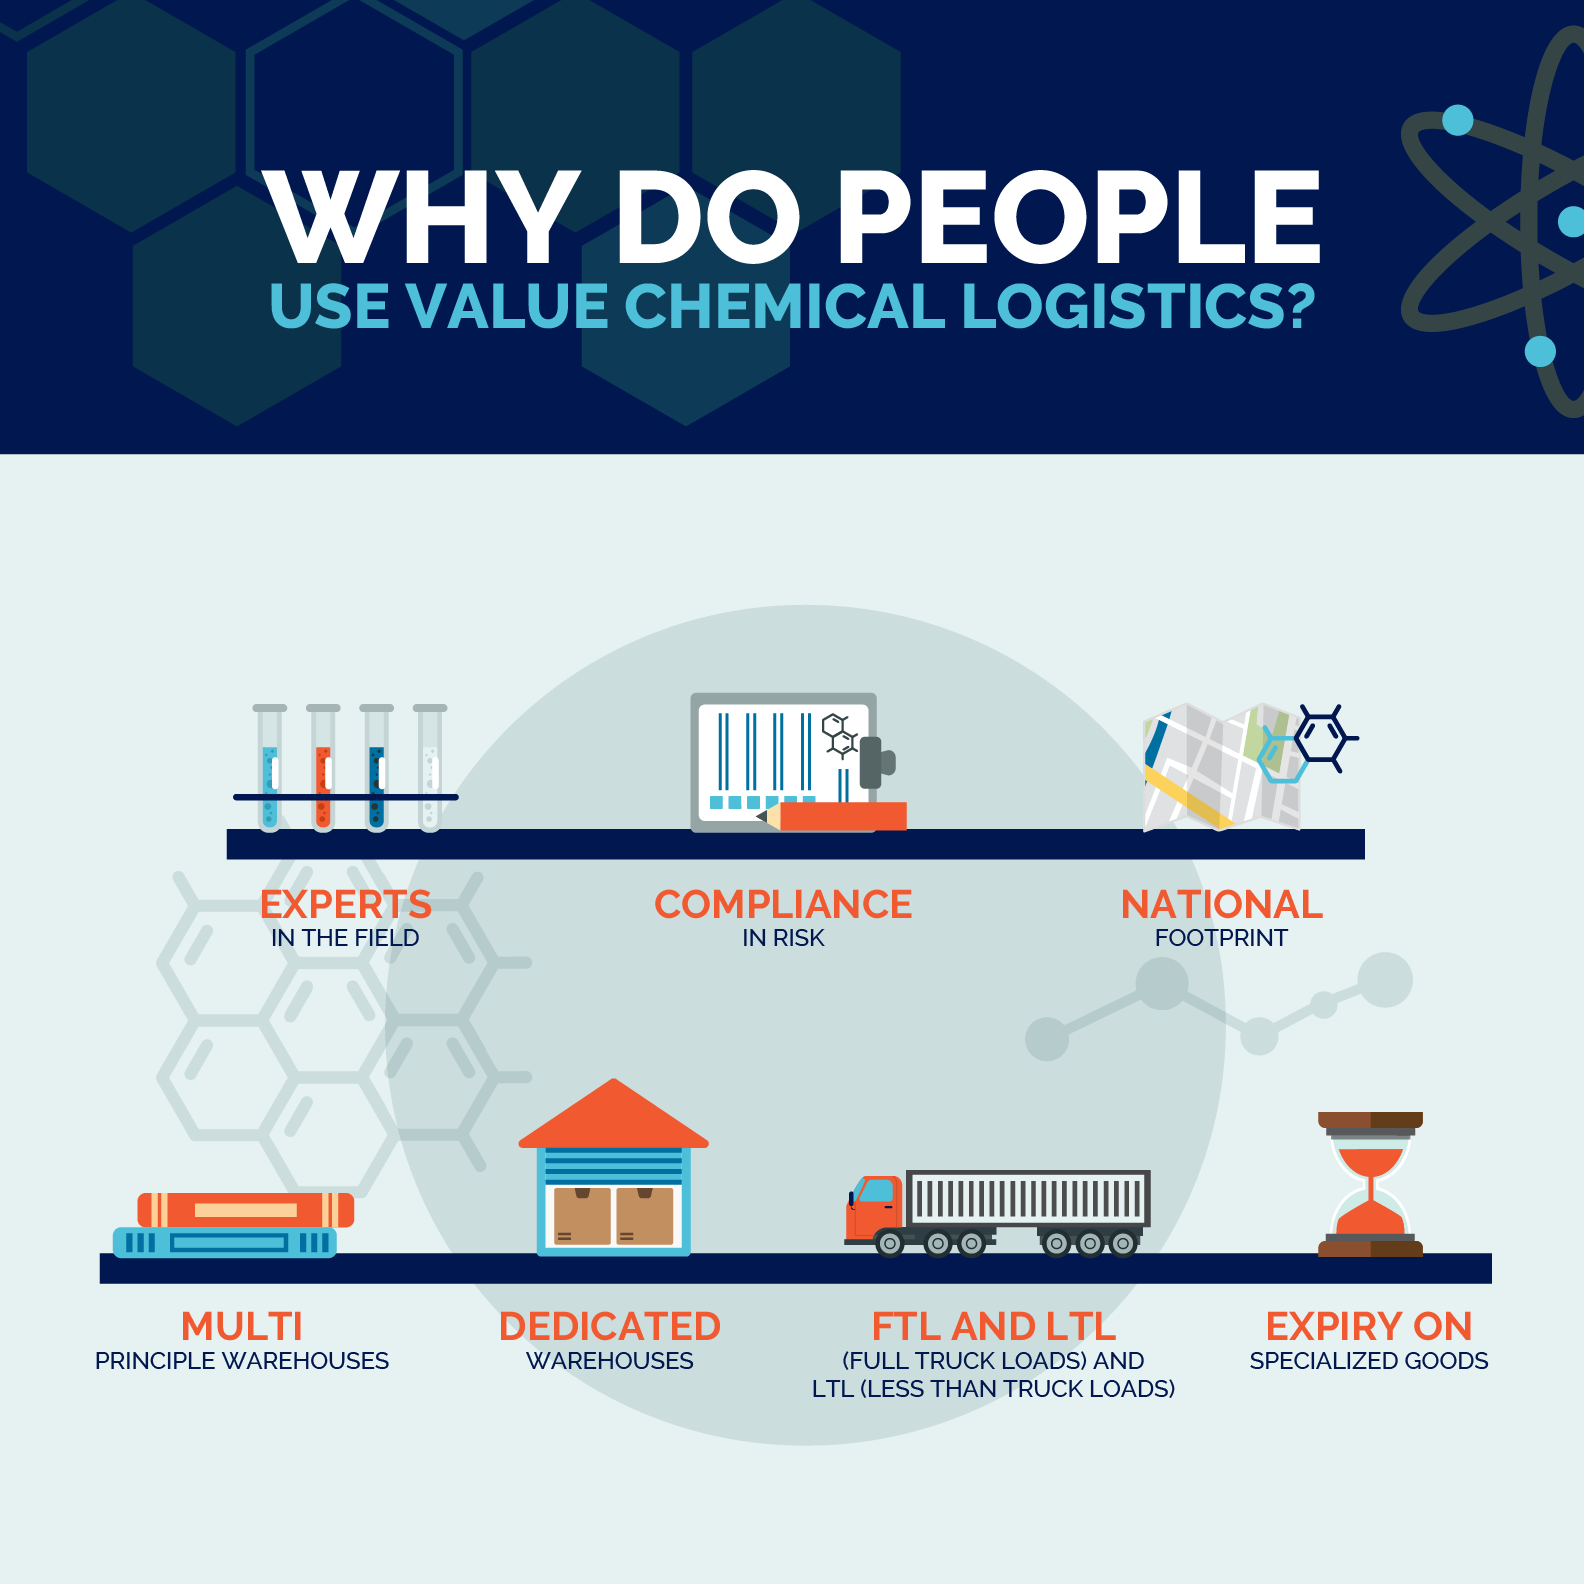 Value Chemical Logistics